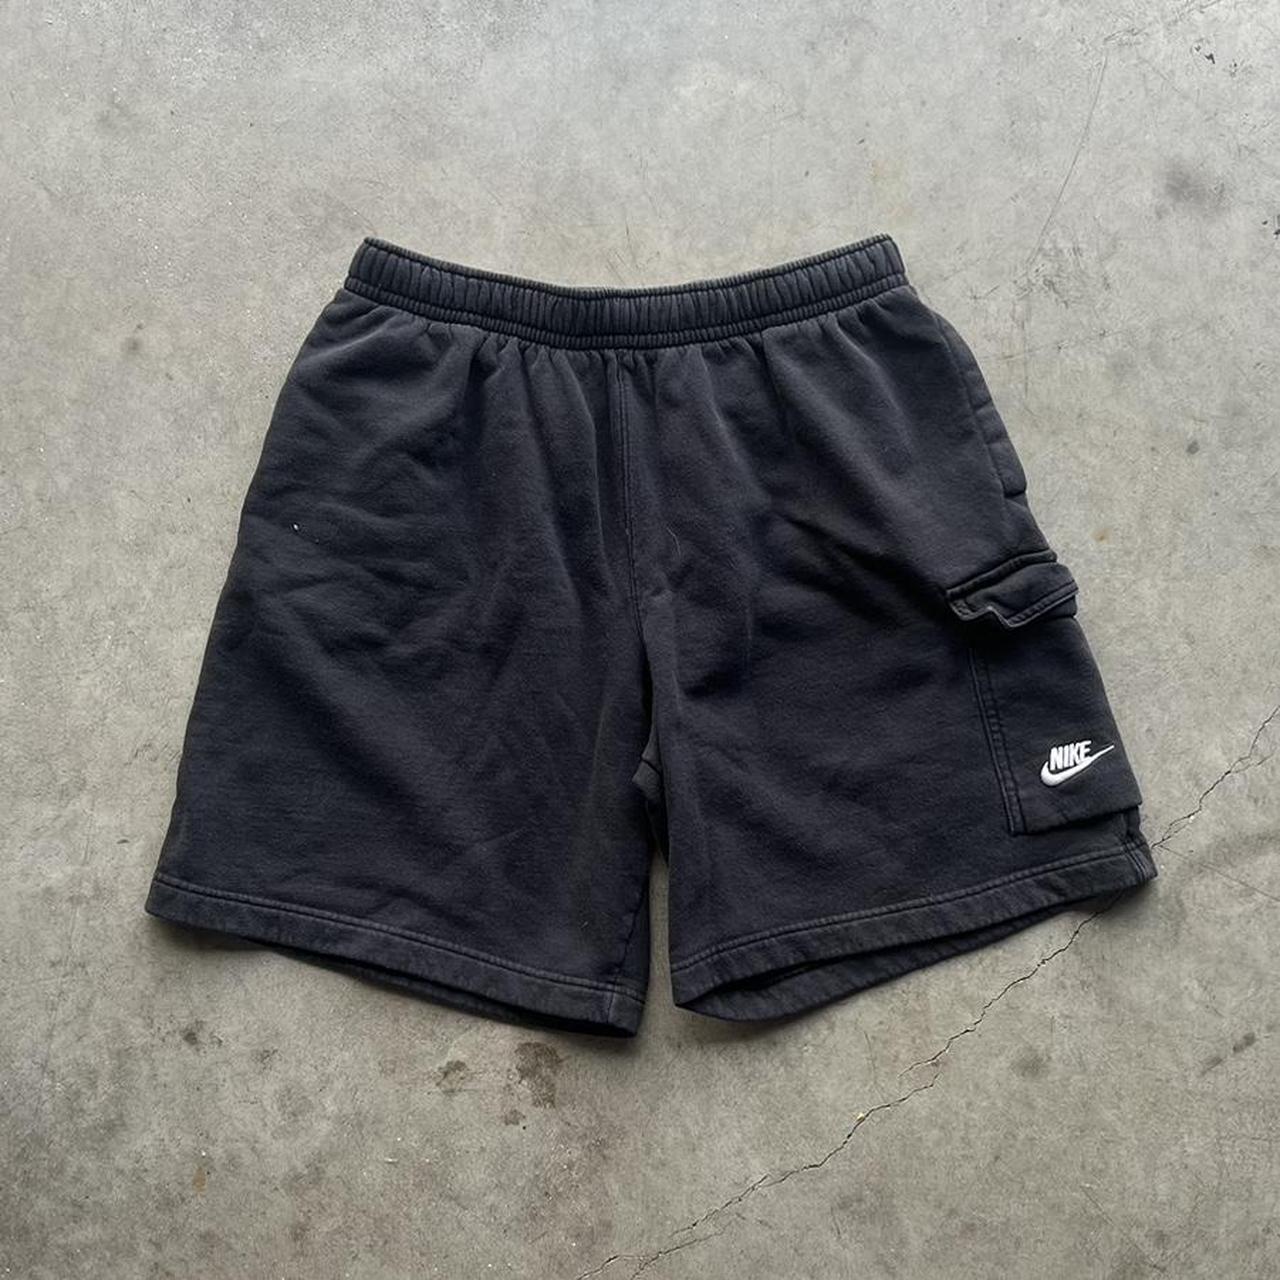 modern nike pocket shorts 🔥🔥 -size L, no... - Depop